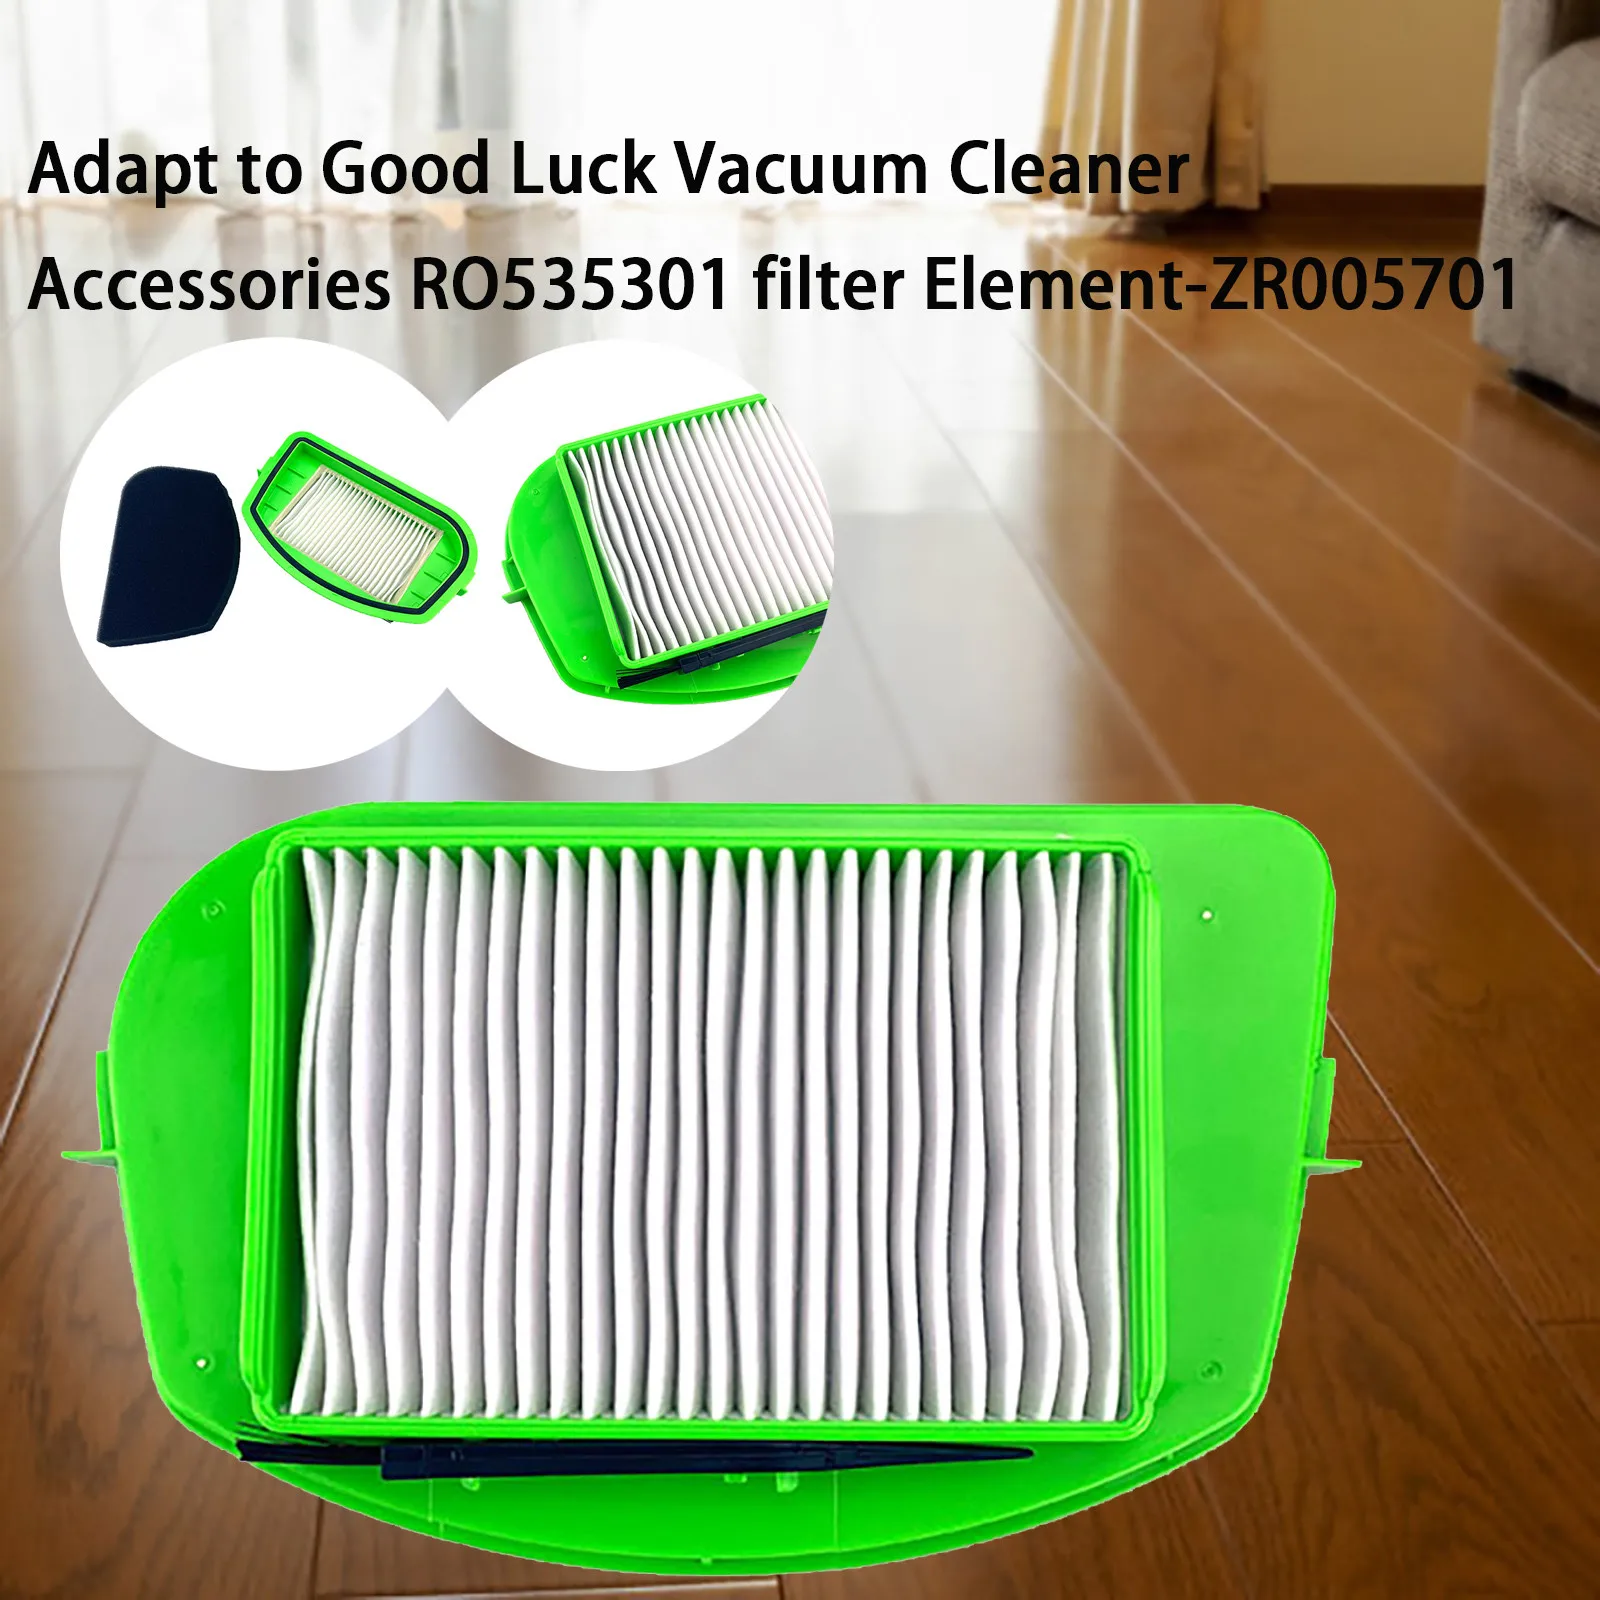 Filter Hepa Filter Vacuum Cleaner Accessories For Rowenta Ro535301 Zr005701 Vacuum Cleaner Cleaner Filter Dusting Brush#g4